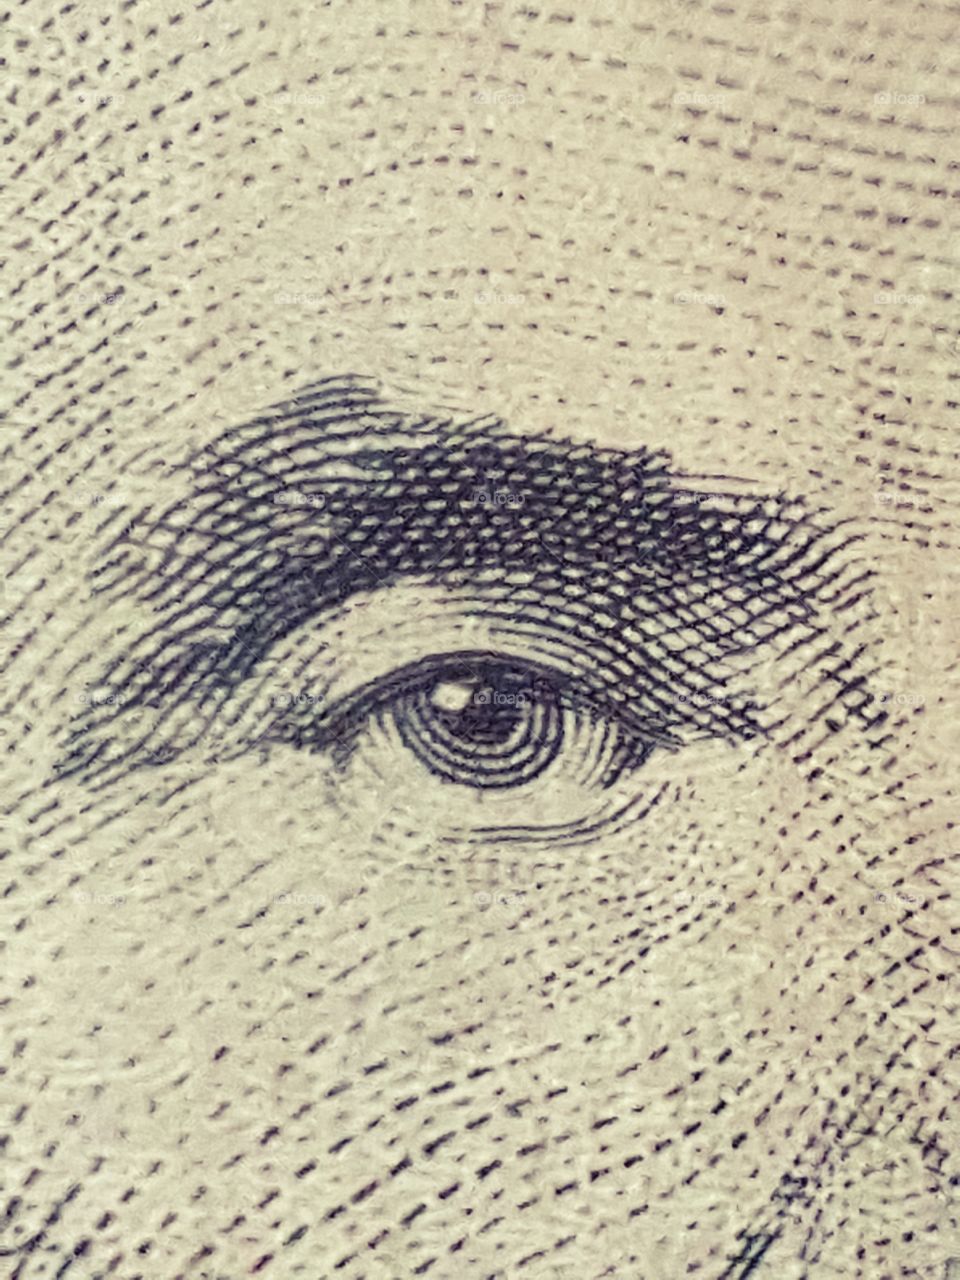 Lincoln Eye on a $5 bill